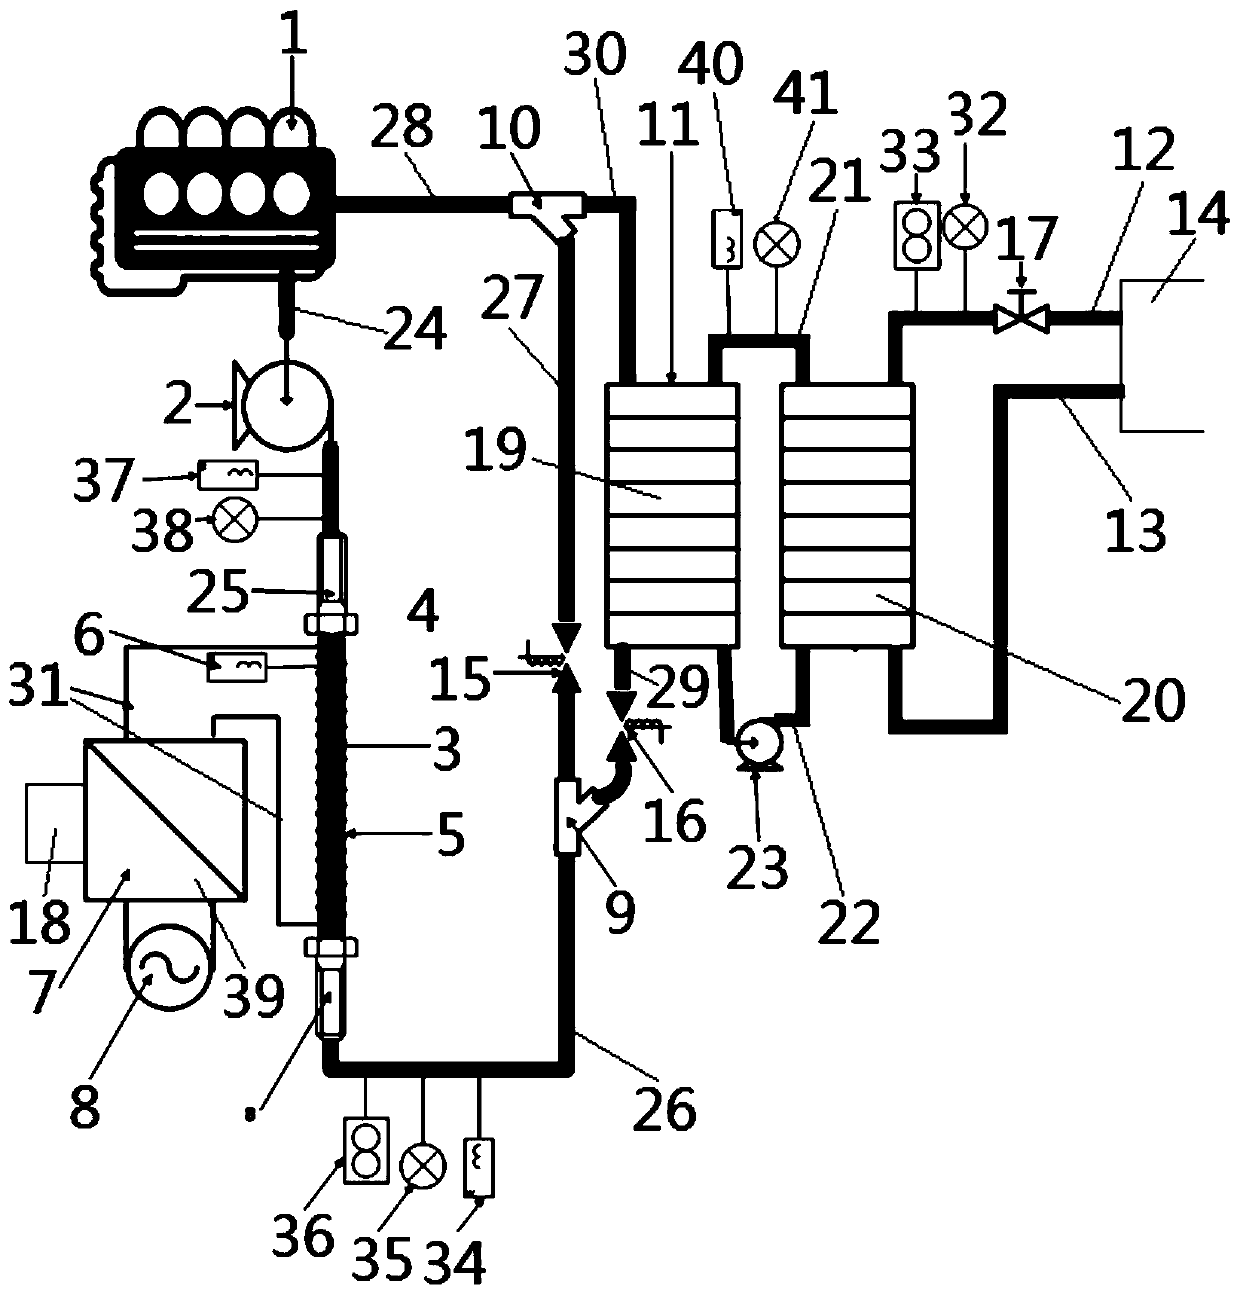 Engine oil temperature regulation device of engine test-bed